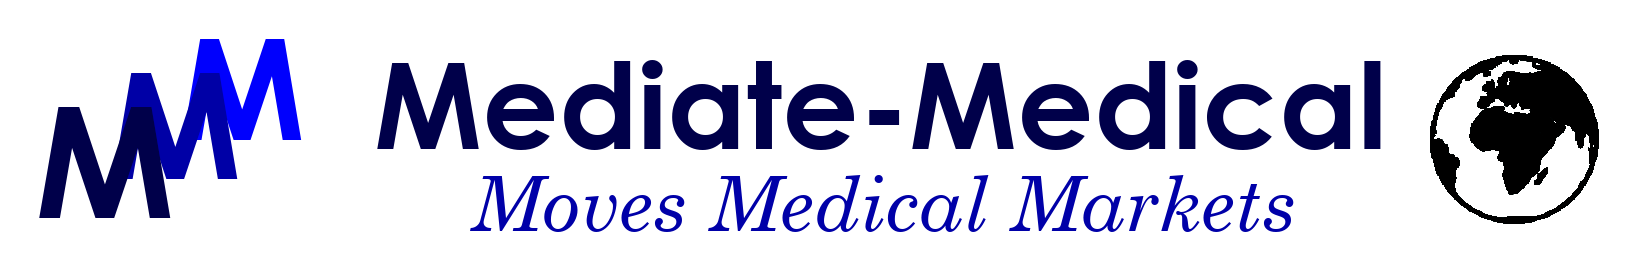 Mediate-Medical Logo